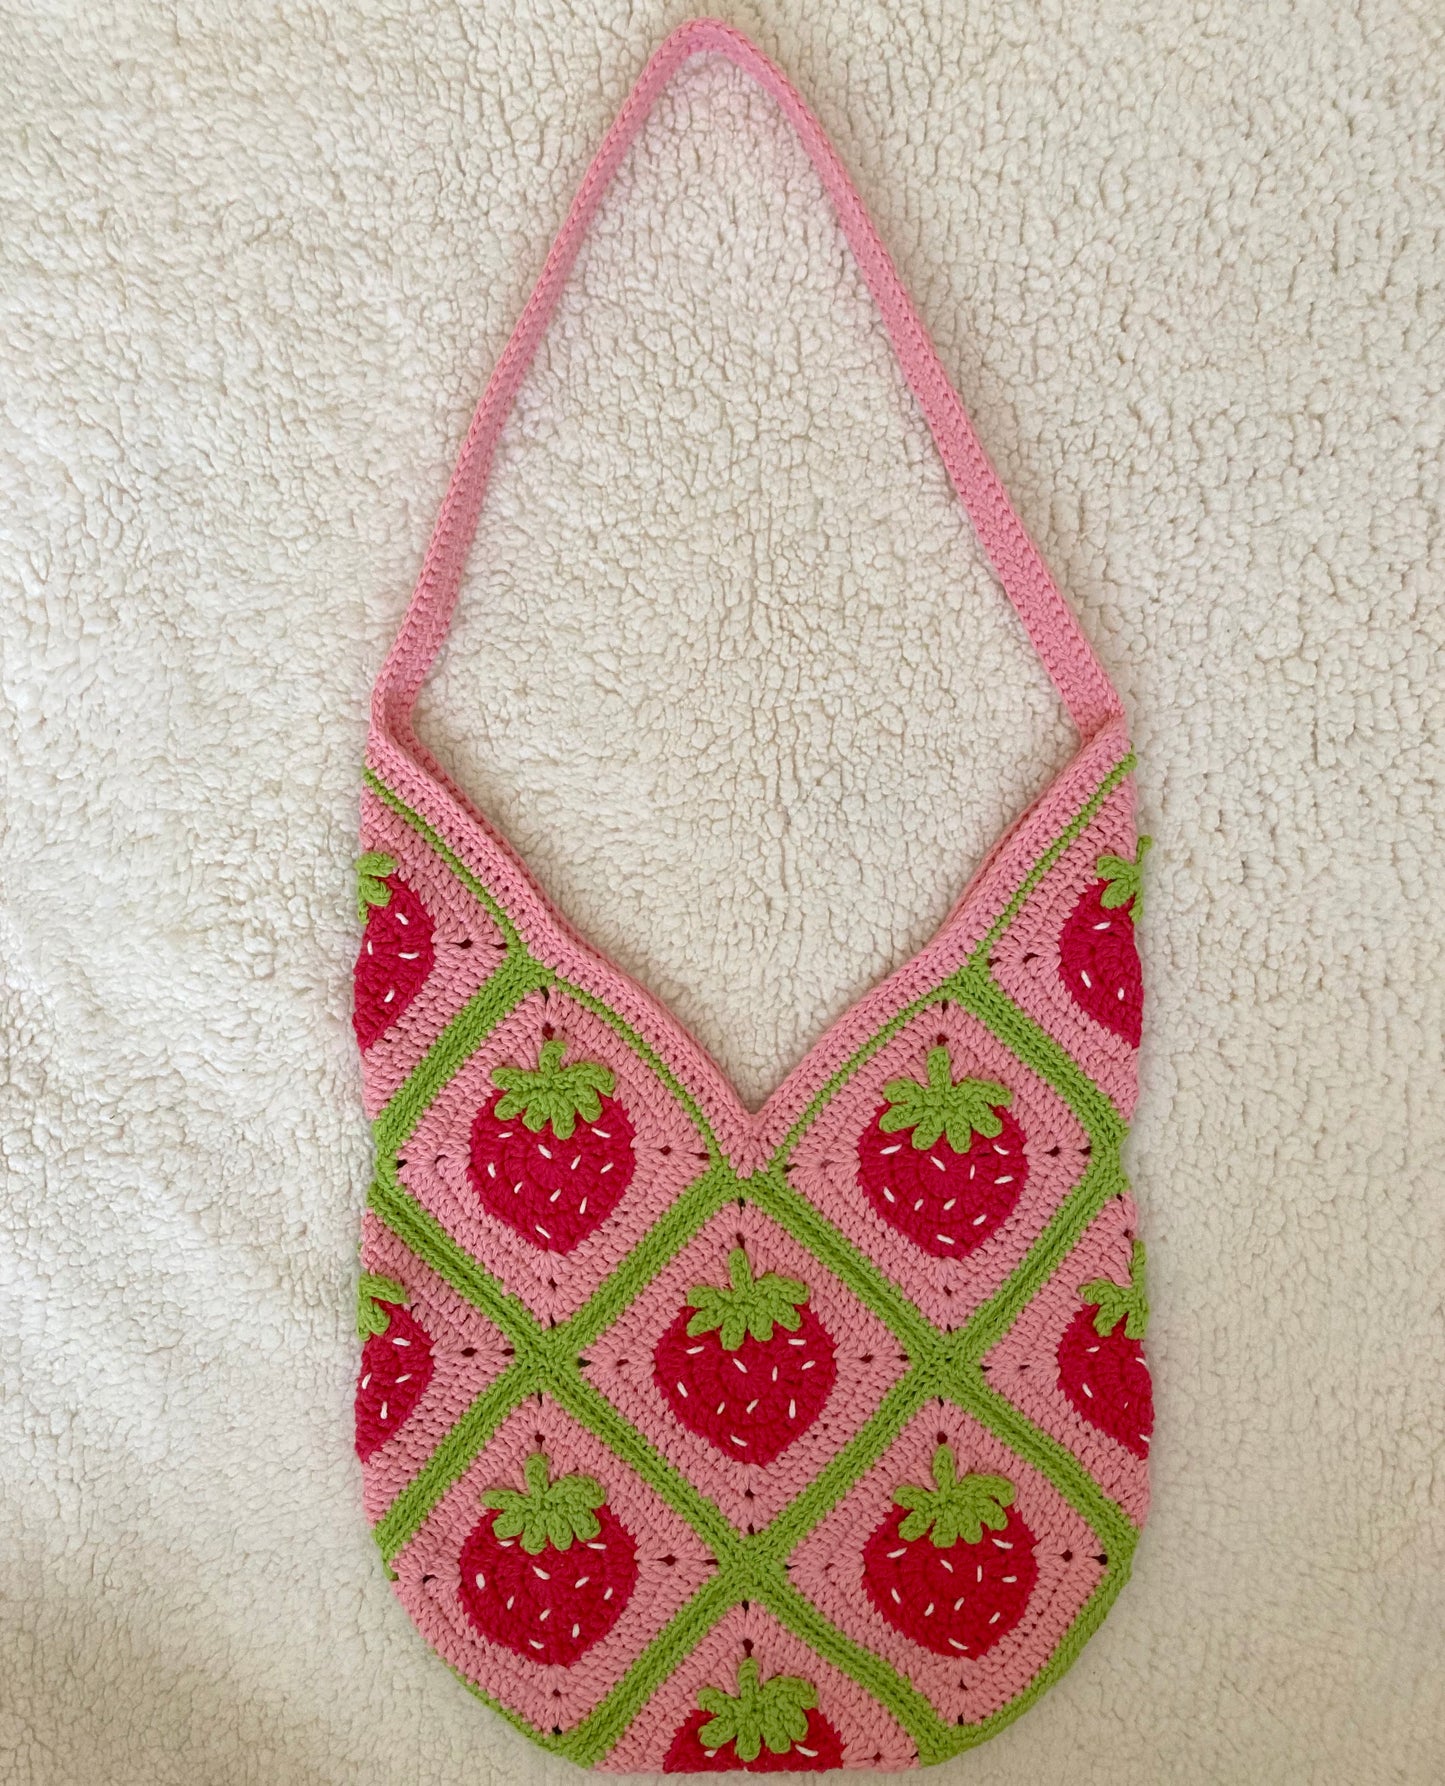 Strawberry Granny Square Crochet Crossbody Bag - Large